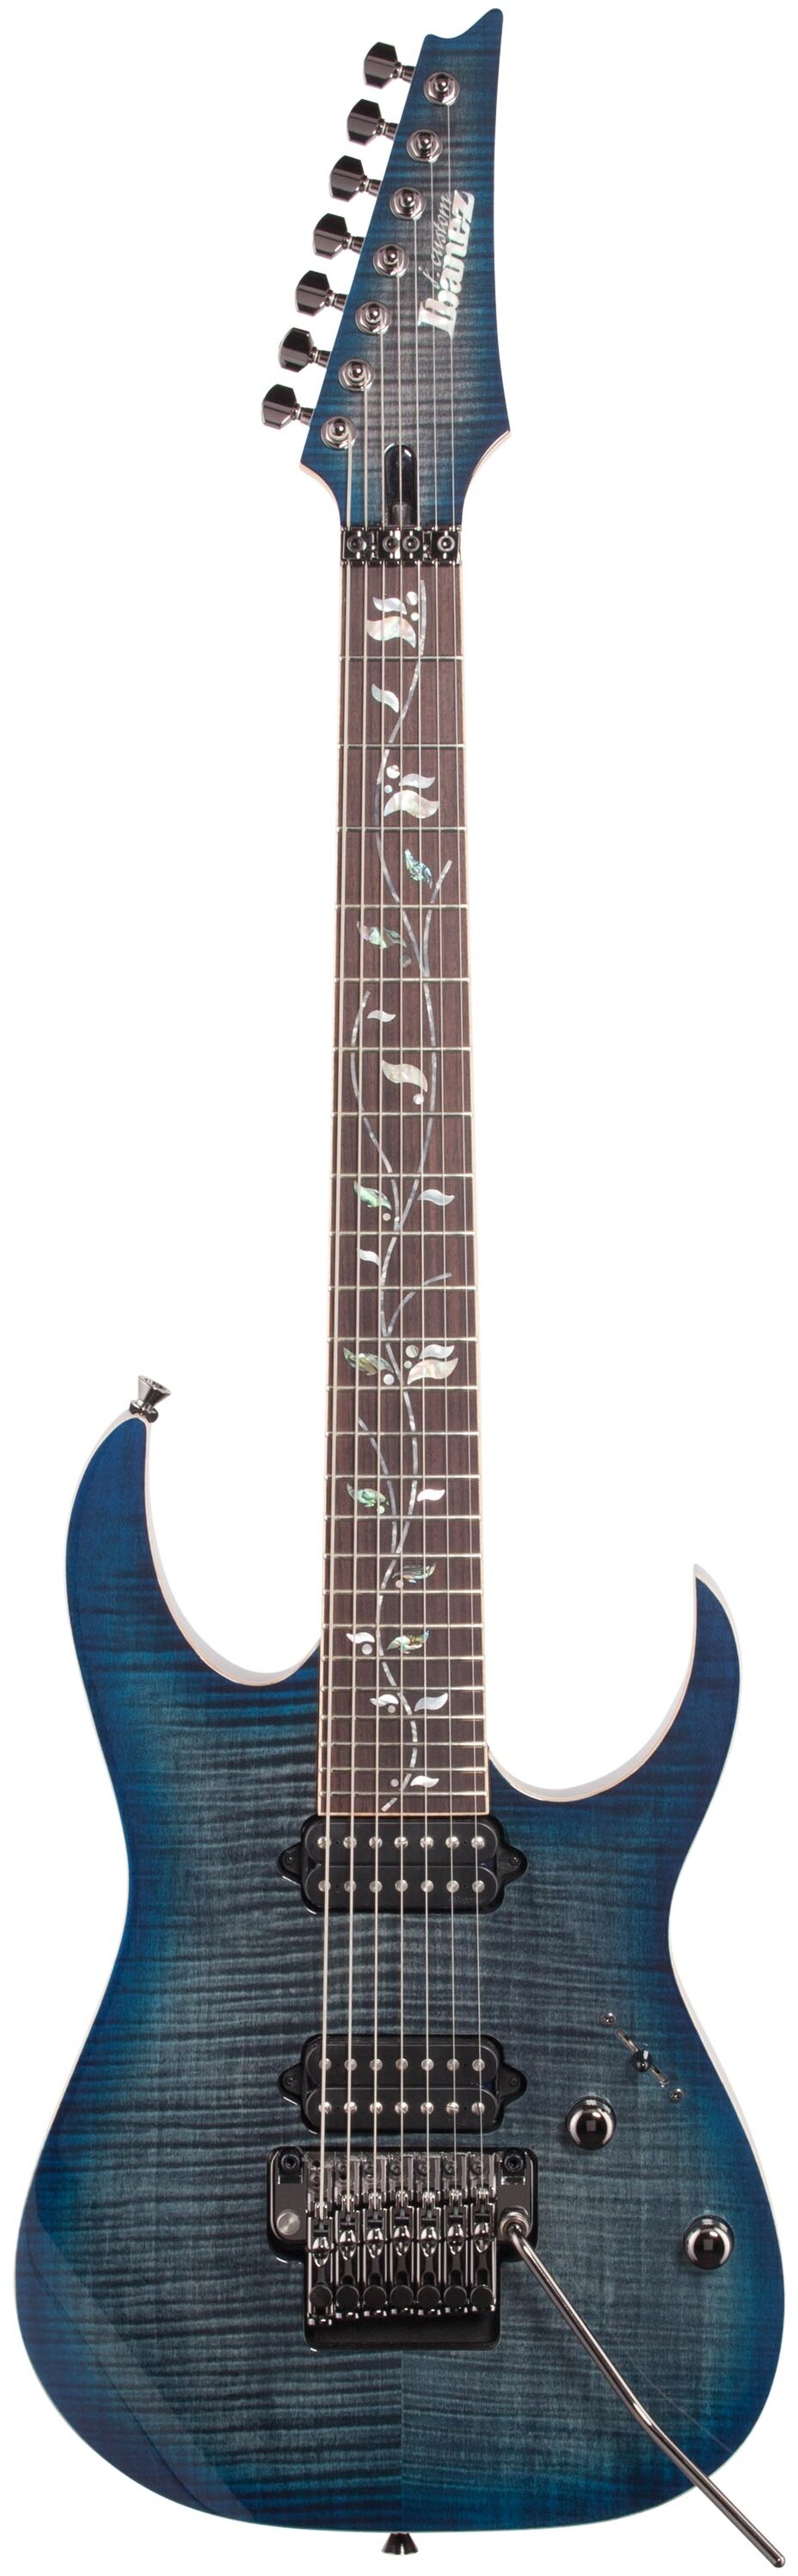 Ibanez RG8527Z J Custom Electric Guitar (with Case) zZounds